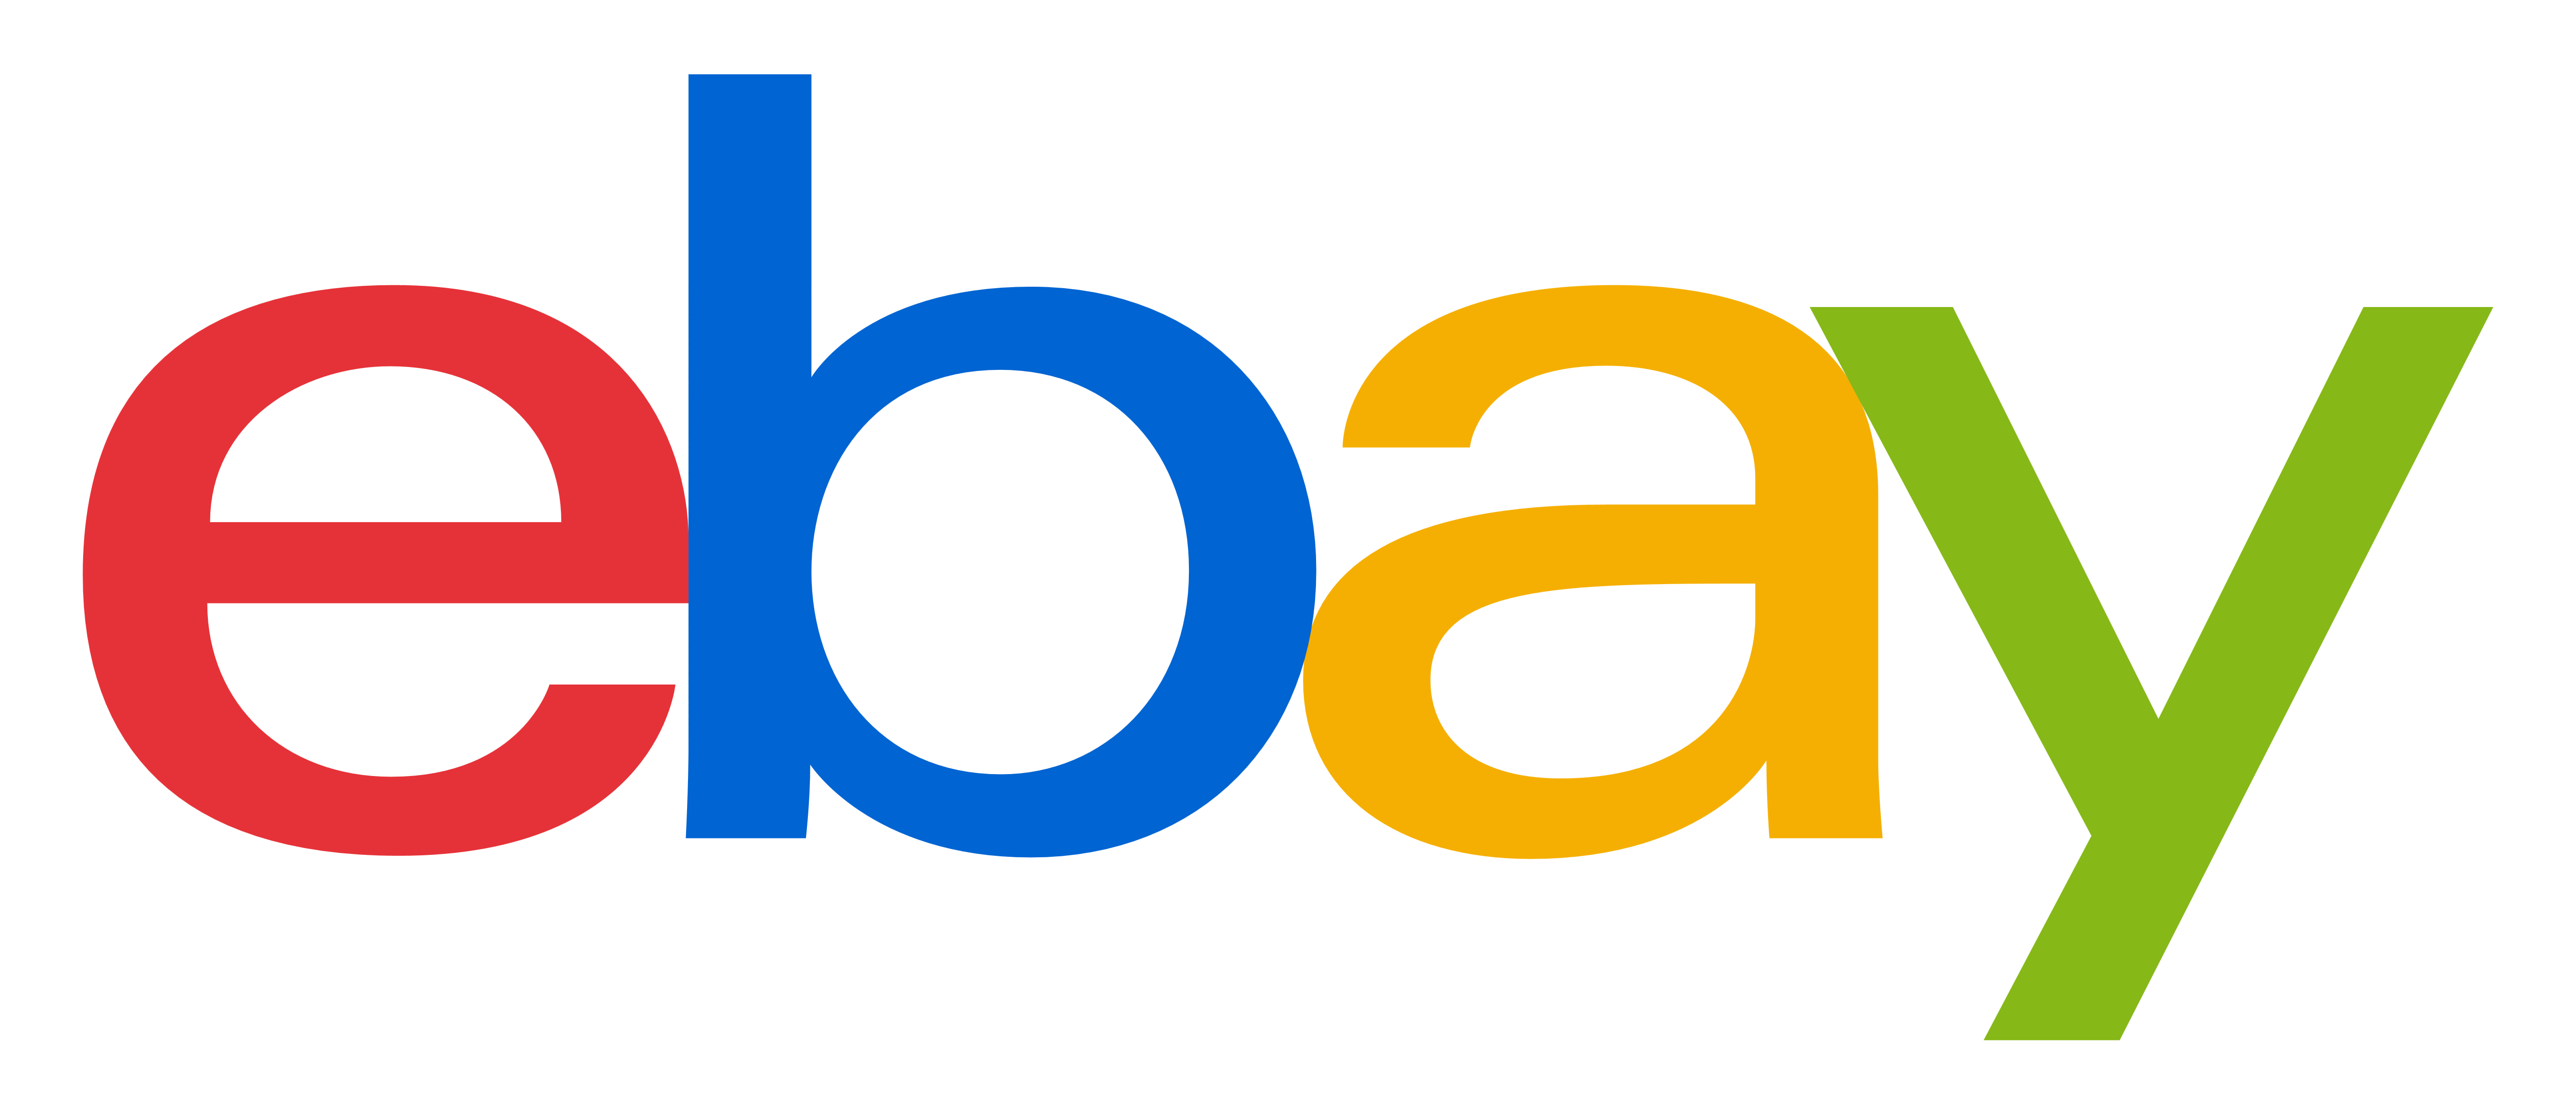 Ebay, new icon | Icon search engine